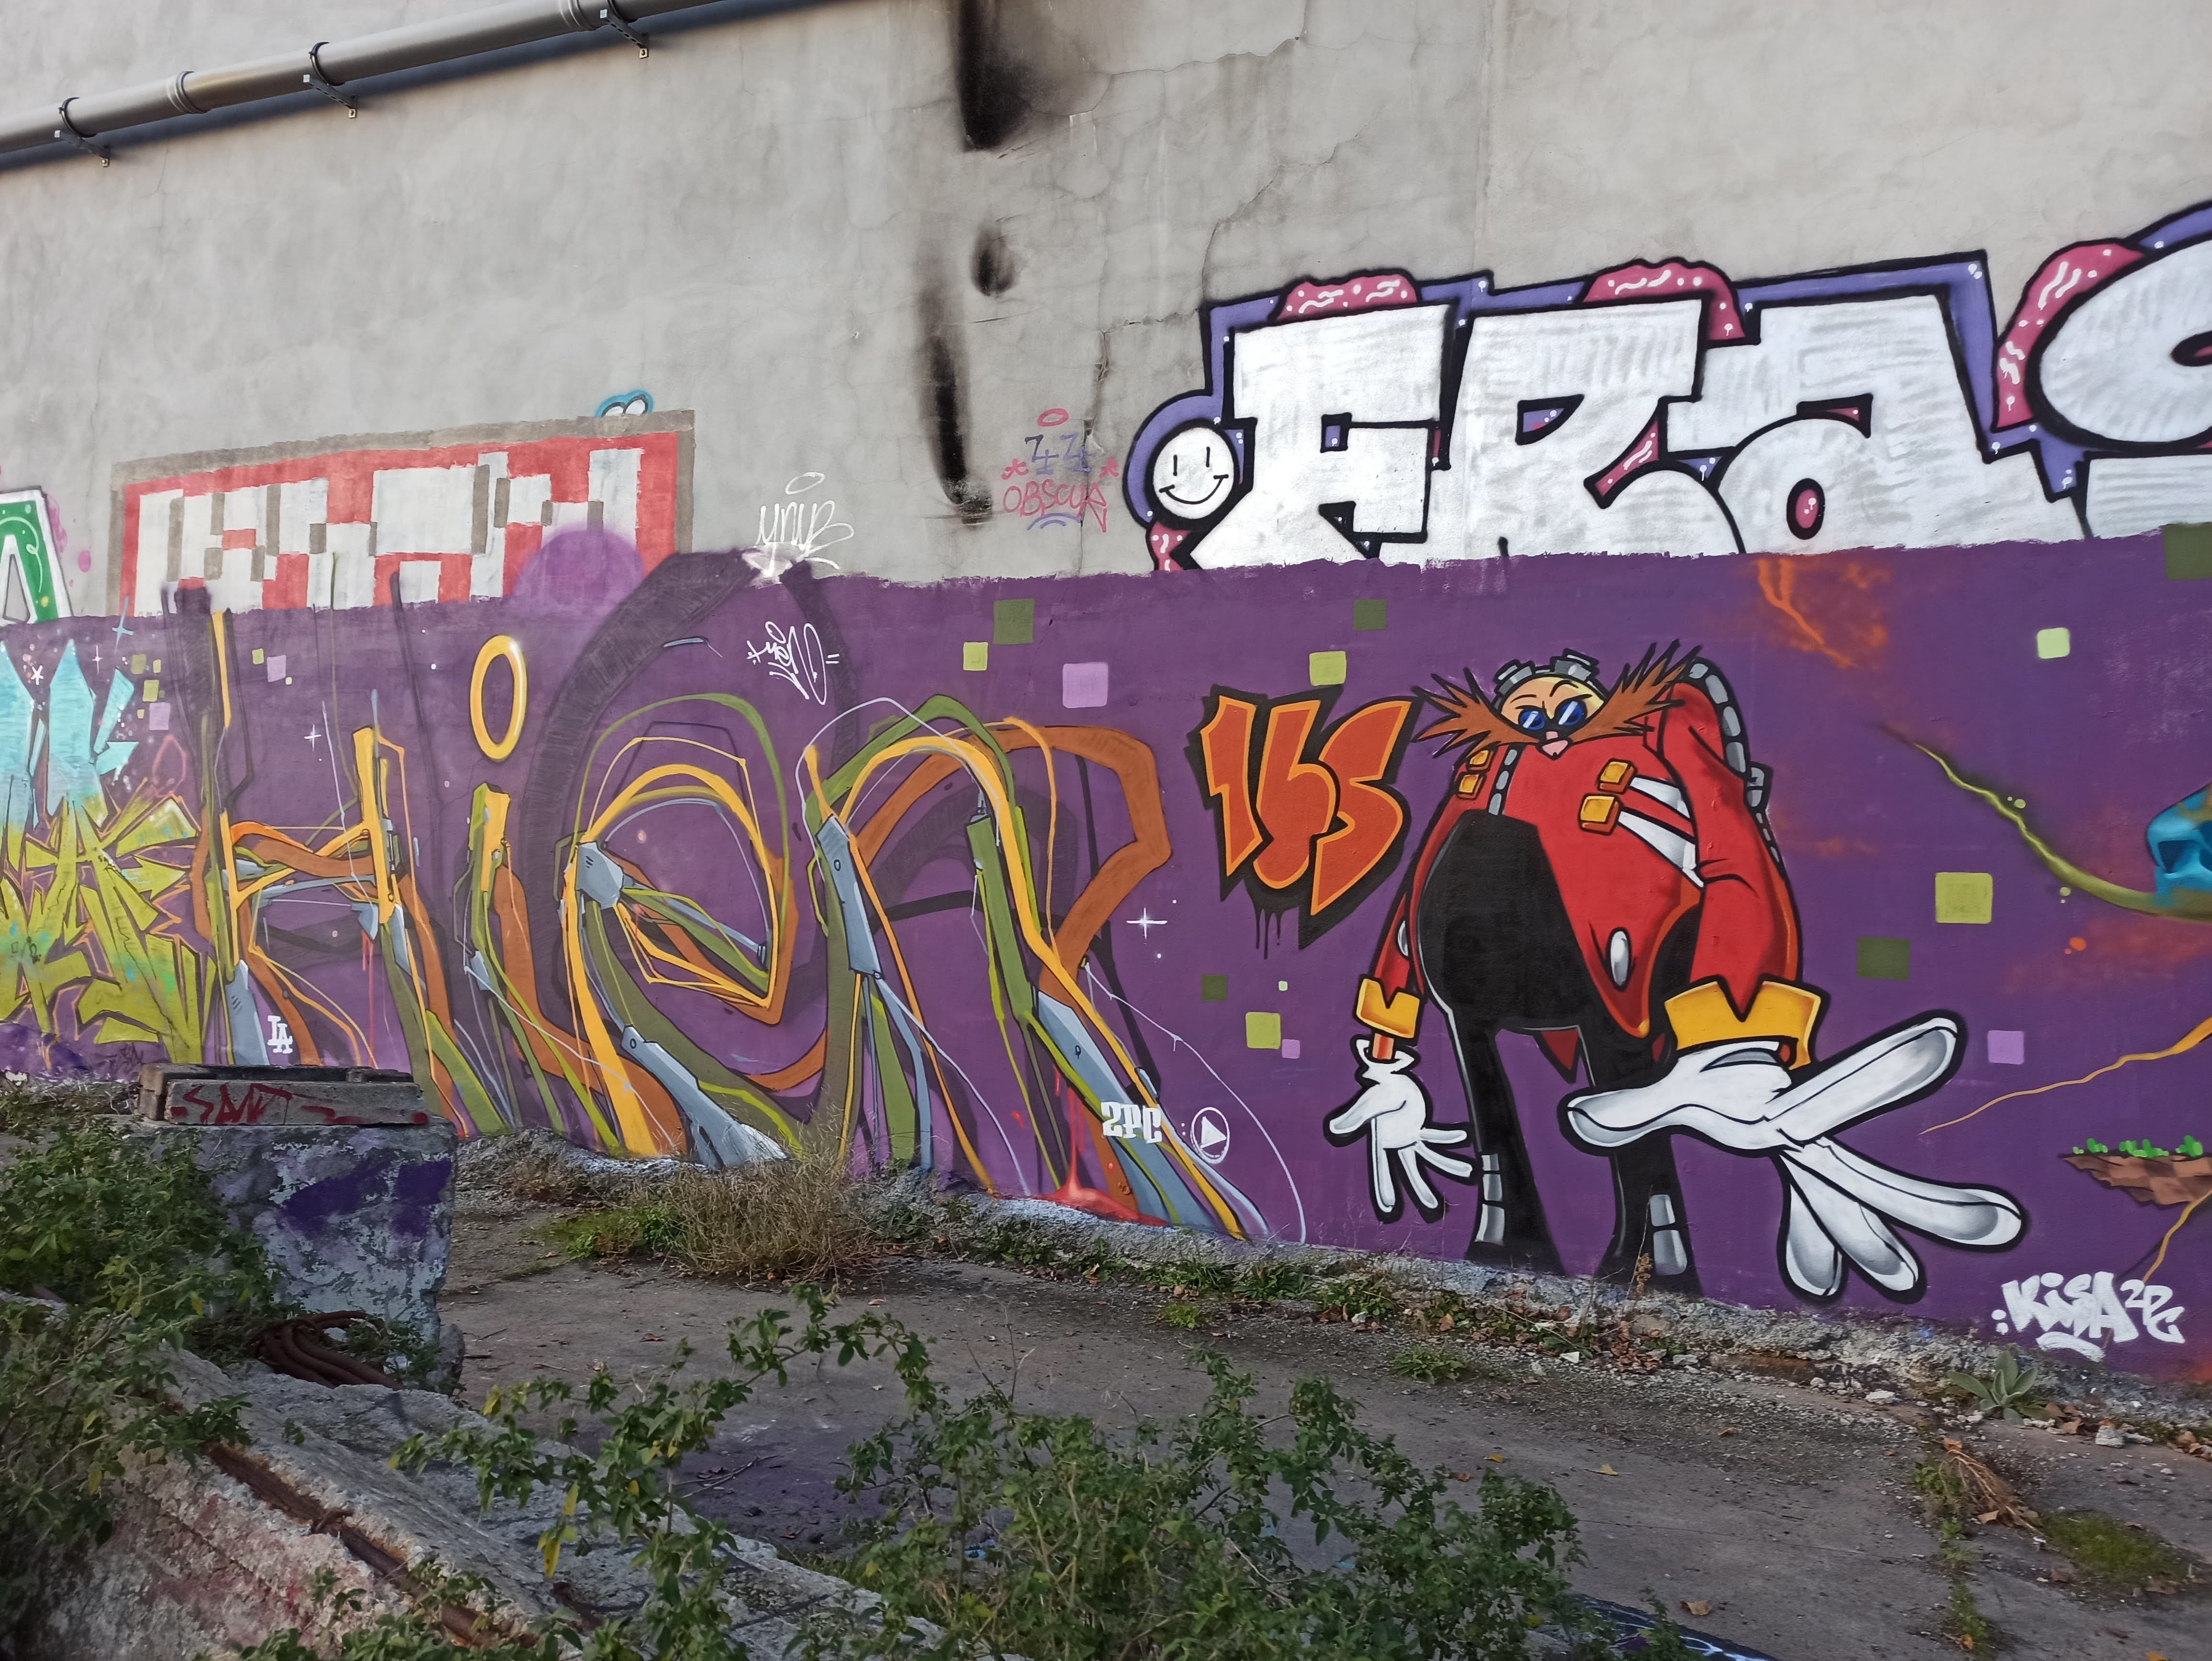 Graffiti 4669 Eggman captured by Rabot in Nantes France